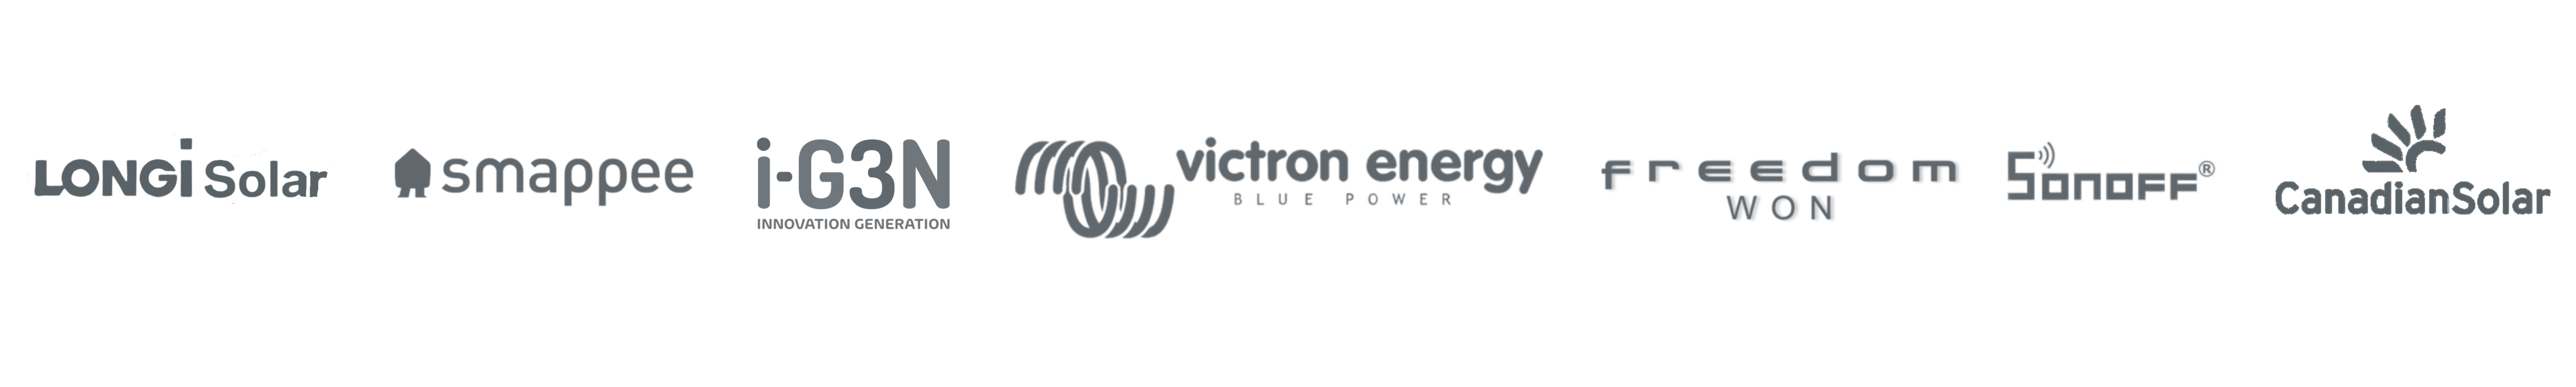 victron canadian solar freedom won